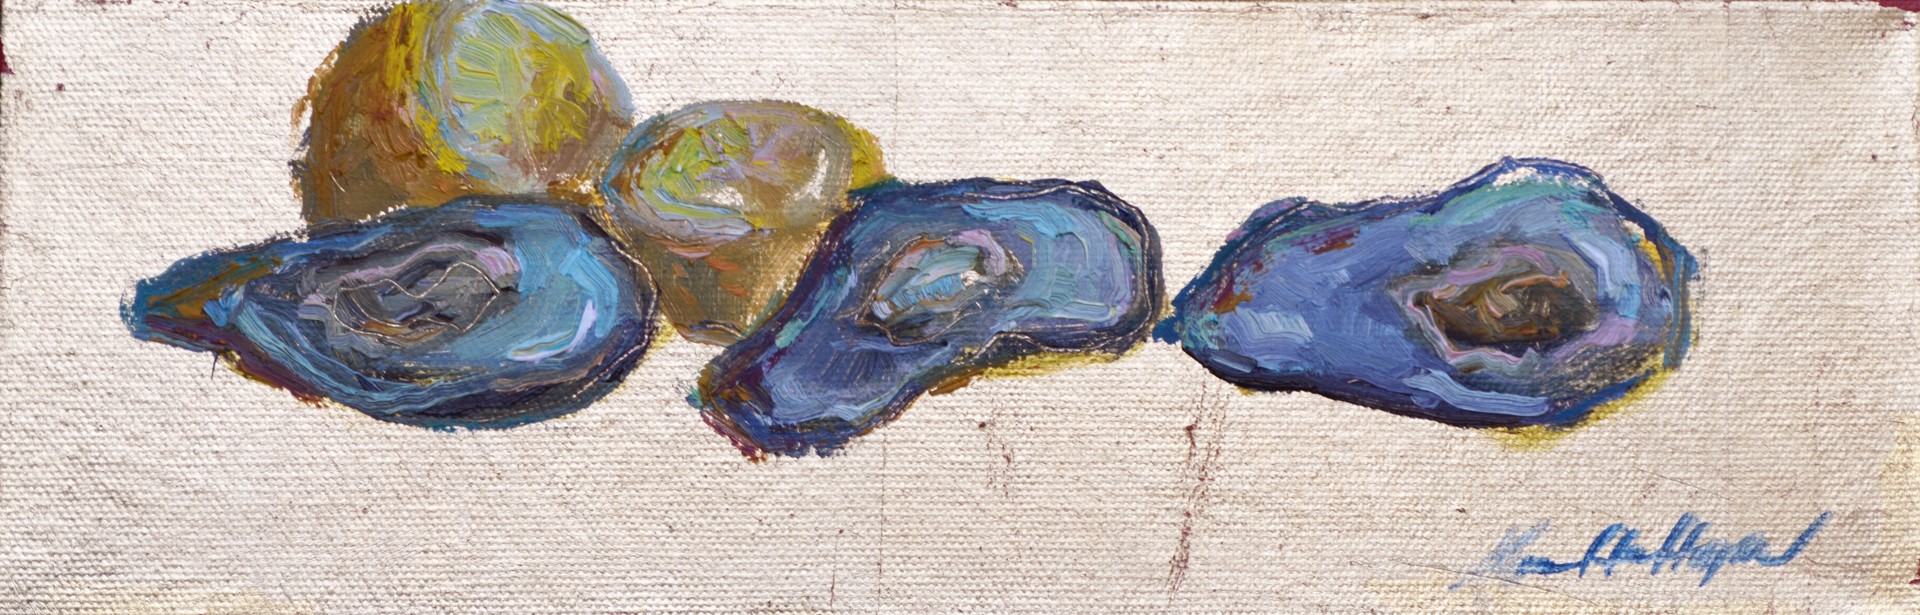 Oysters! by Karen Hewitt Hagan